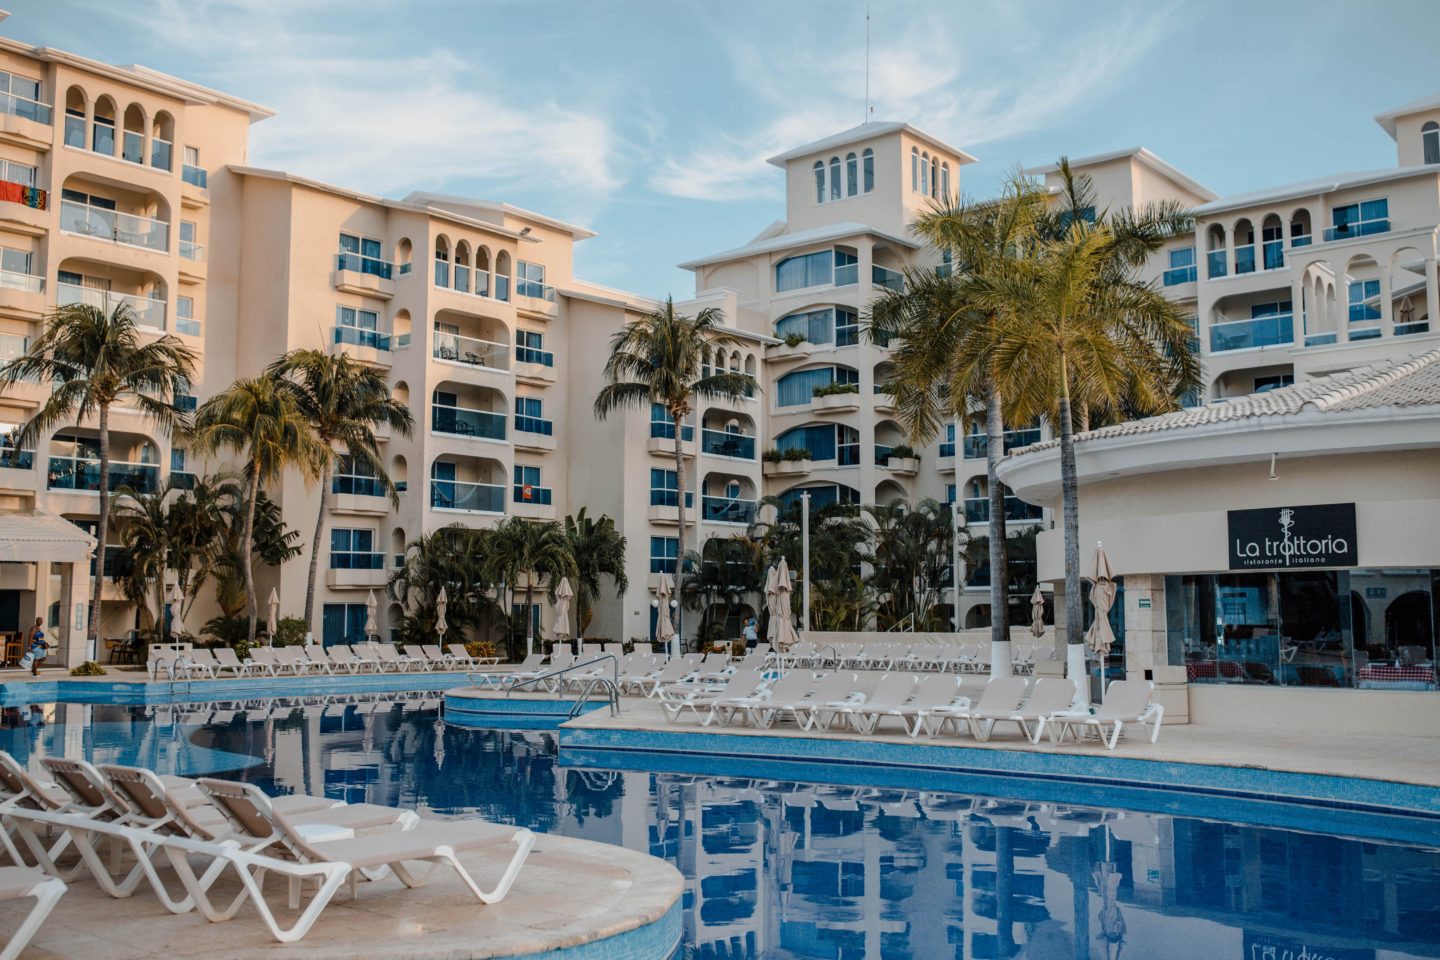 Where to Stay in Cancun: Occidental Costa Cancun Mexico All Inclusive Resort | Dana Berez Travel Guide